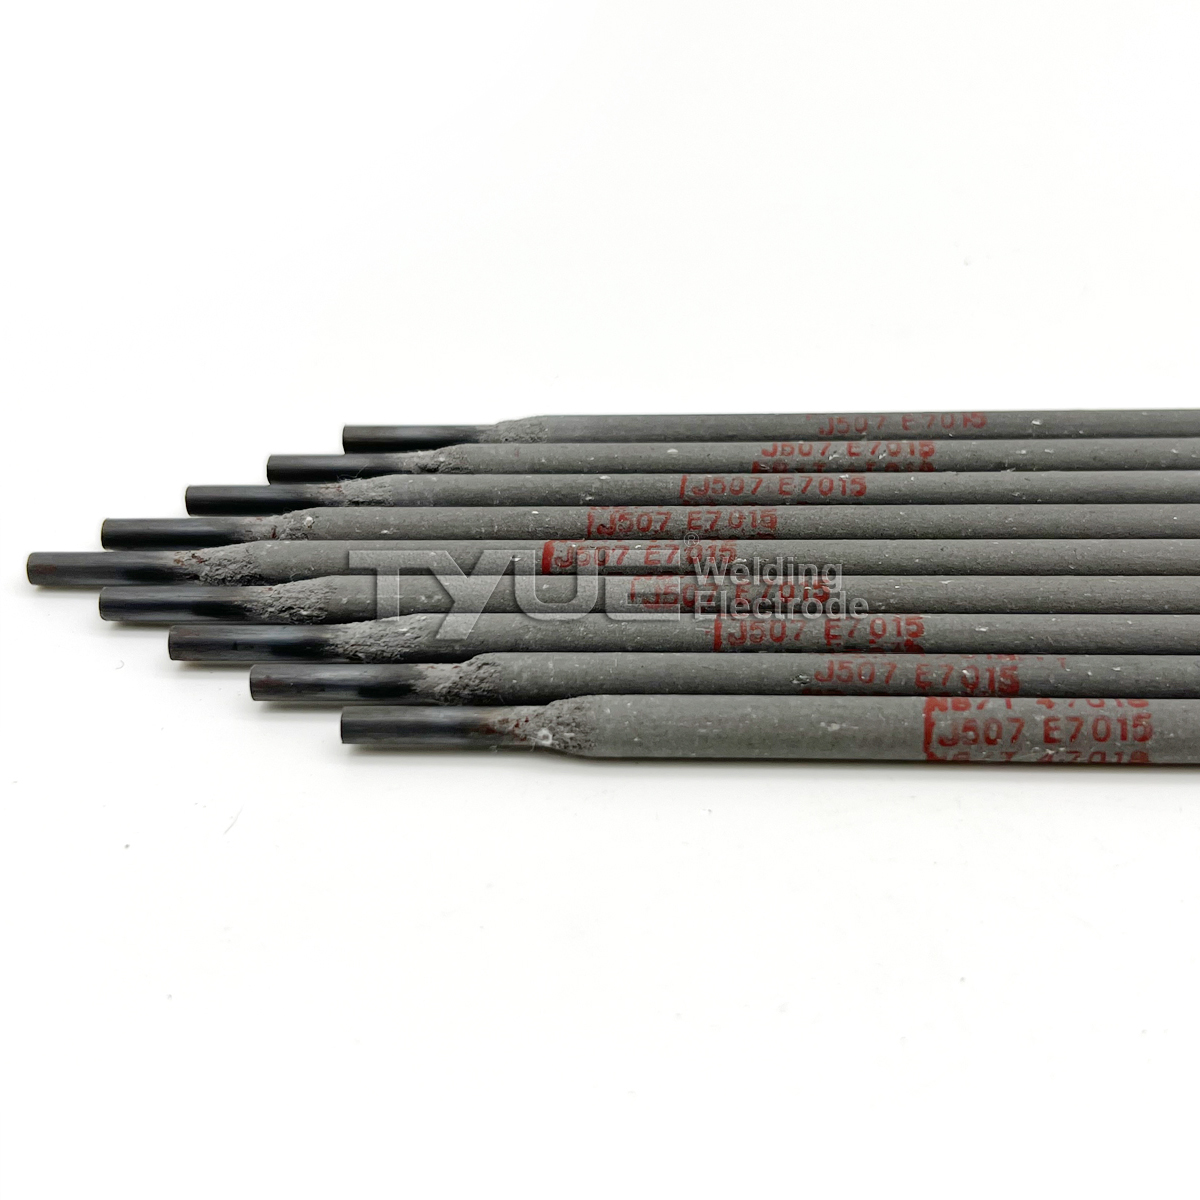 Tyue Brand Carbon Karfe Acr Electrode AWS E7015 Welding Rods Low Hydrogen